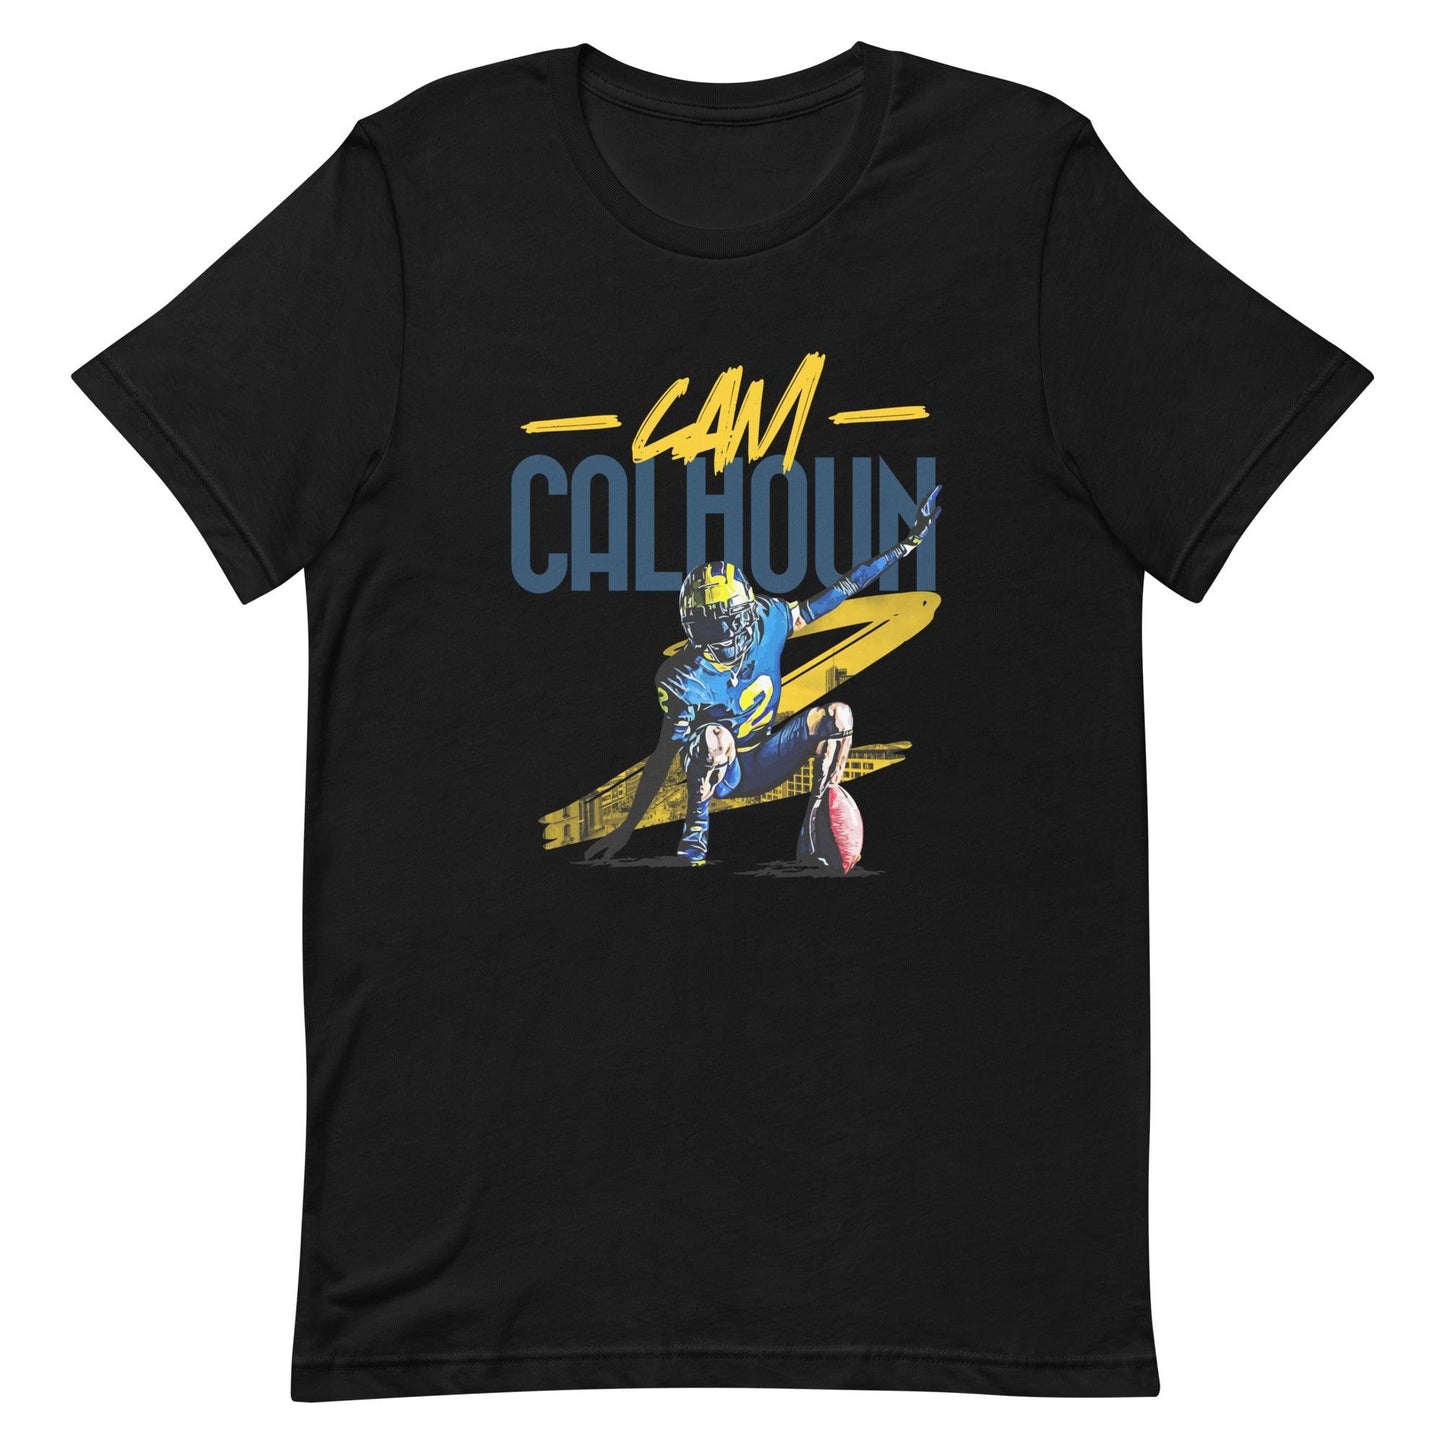 Cameron Calhoun "Gameday" t-shirt - Fan Arch